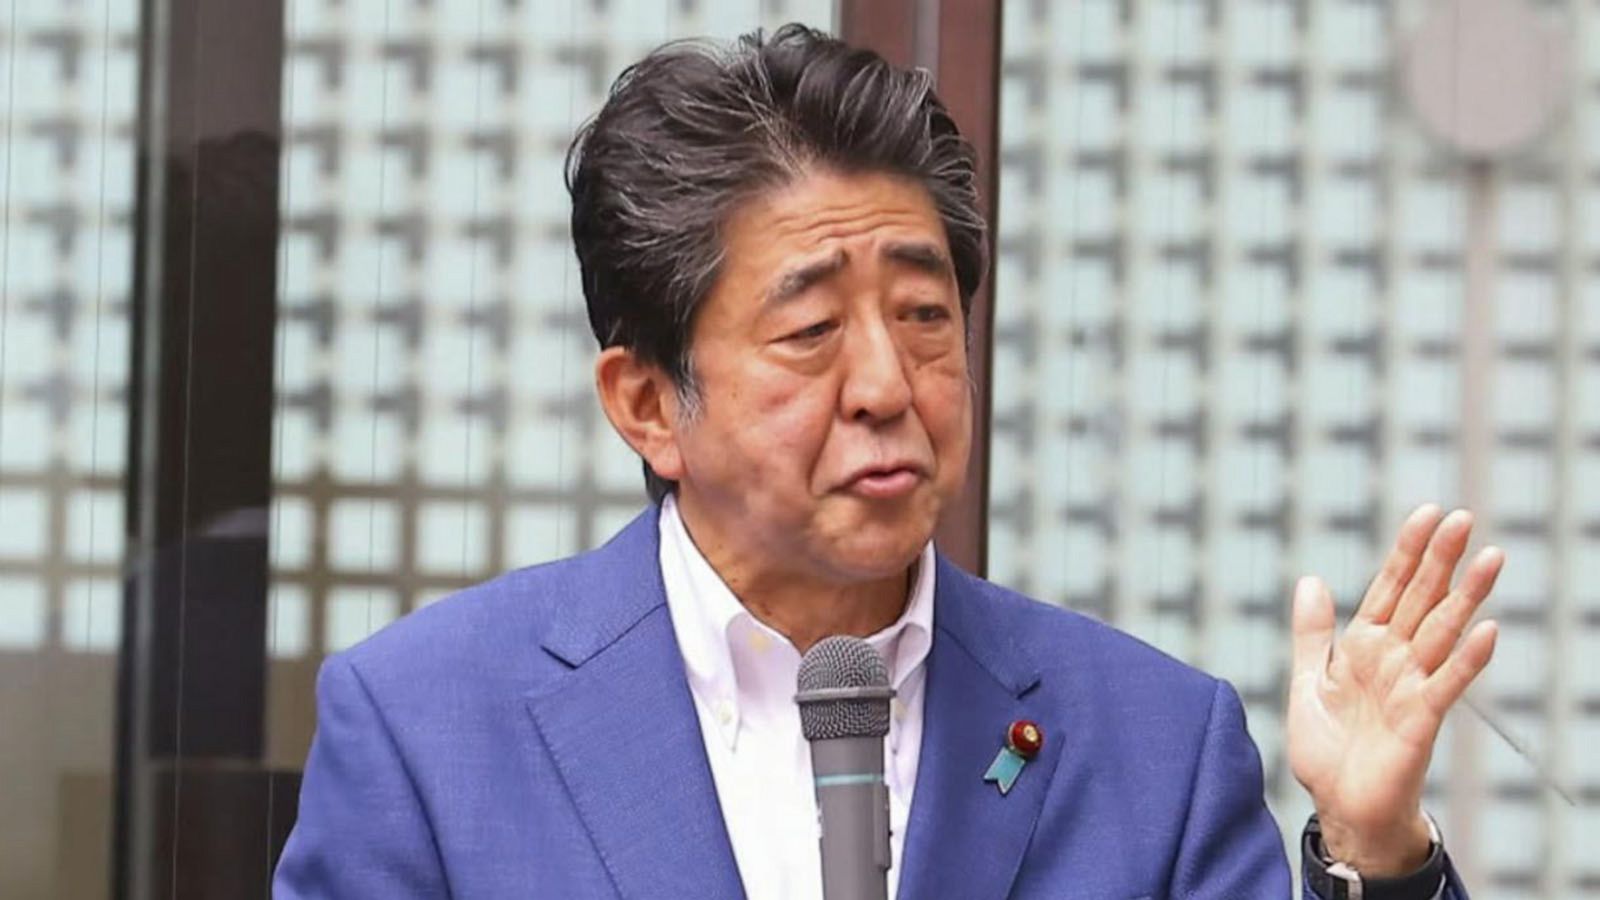 Watch CBS Evening News: Shinzo Abe's assassination leaves Japan reeling -  Full show on CBS